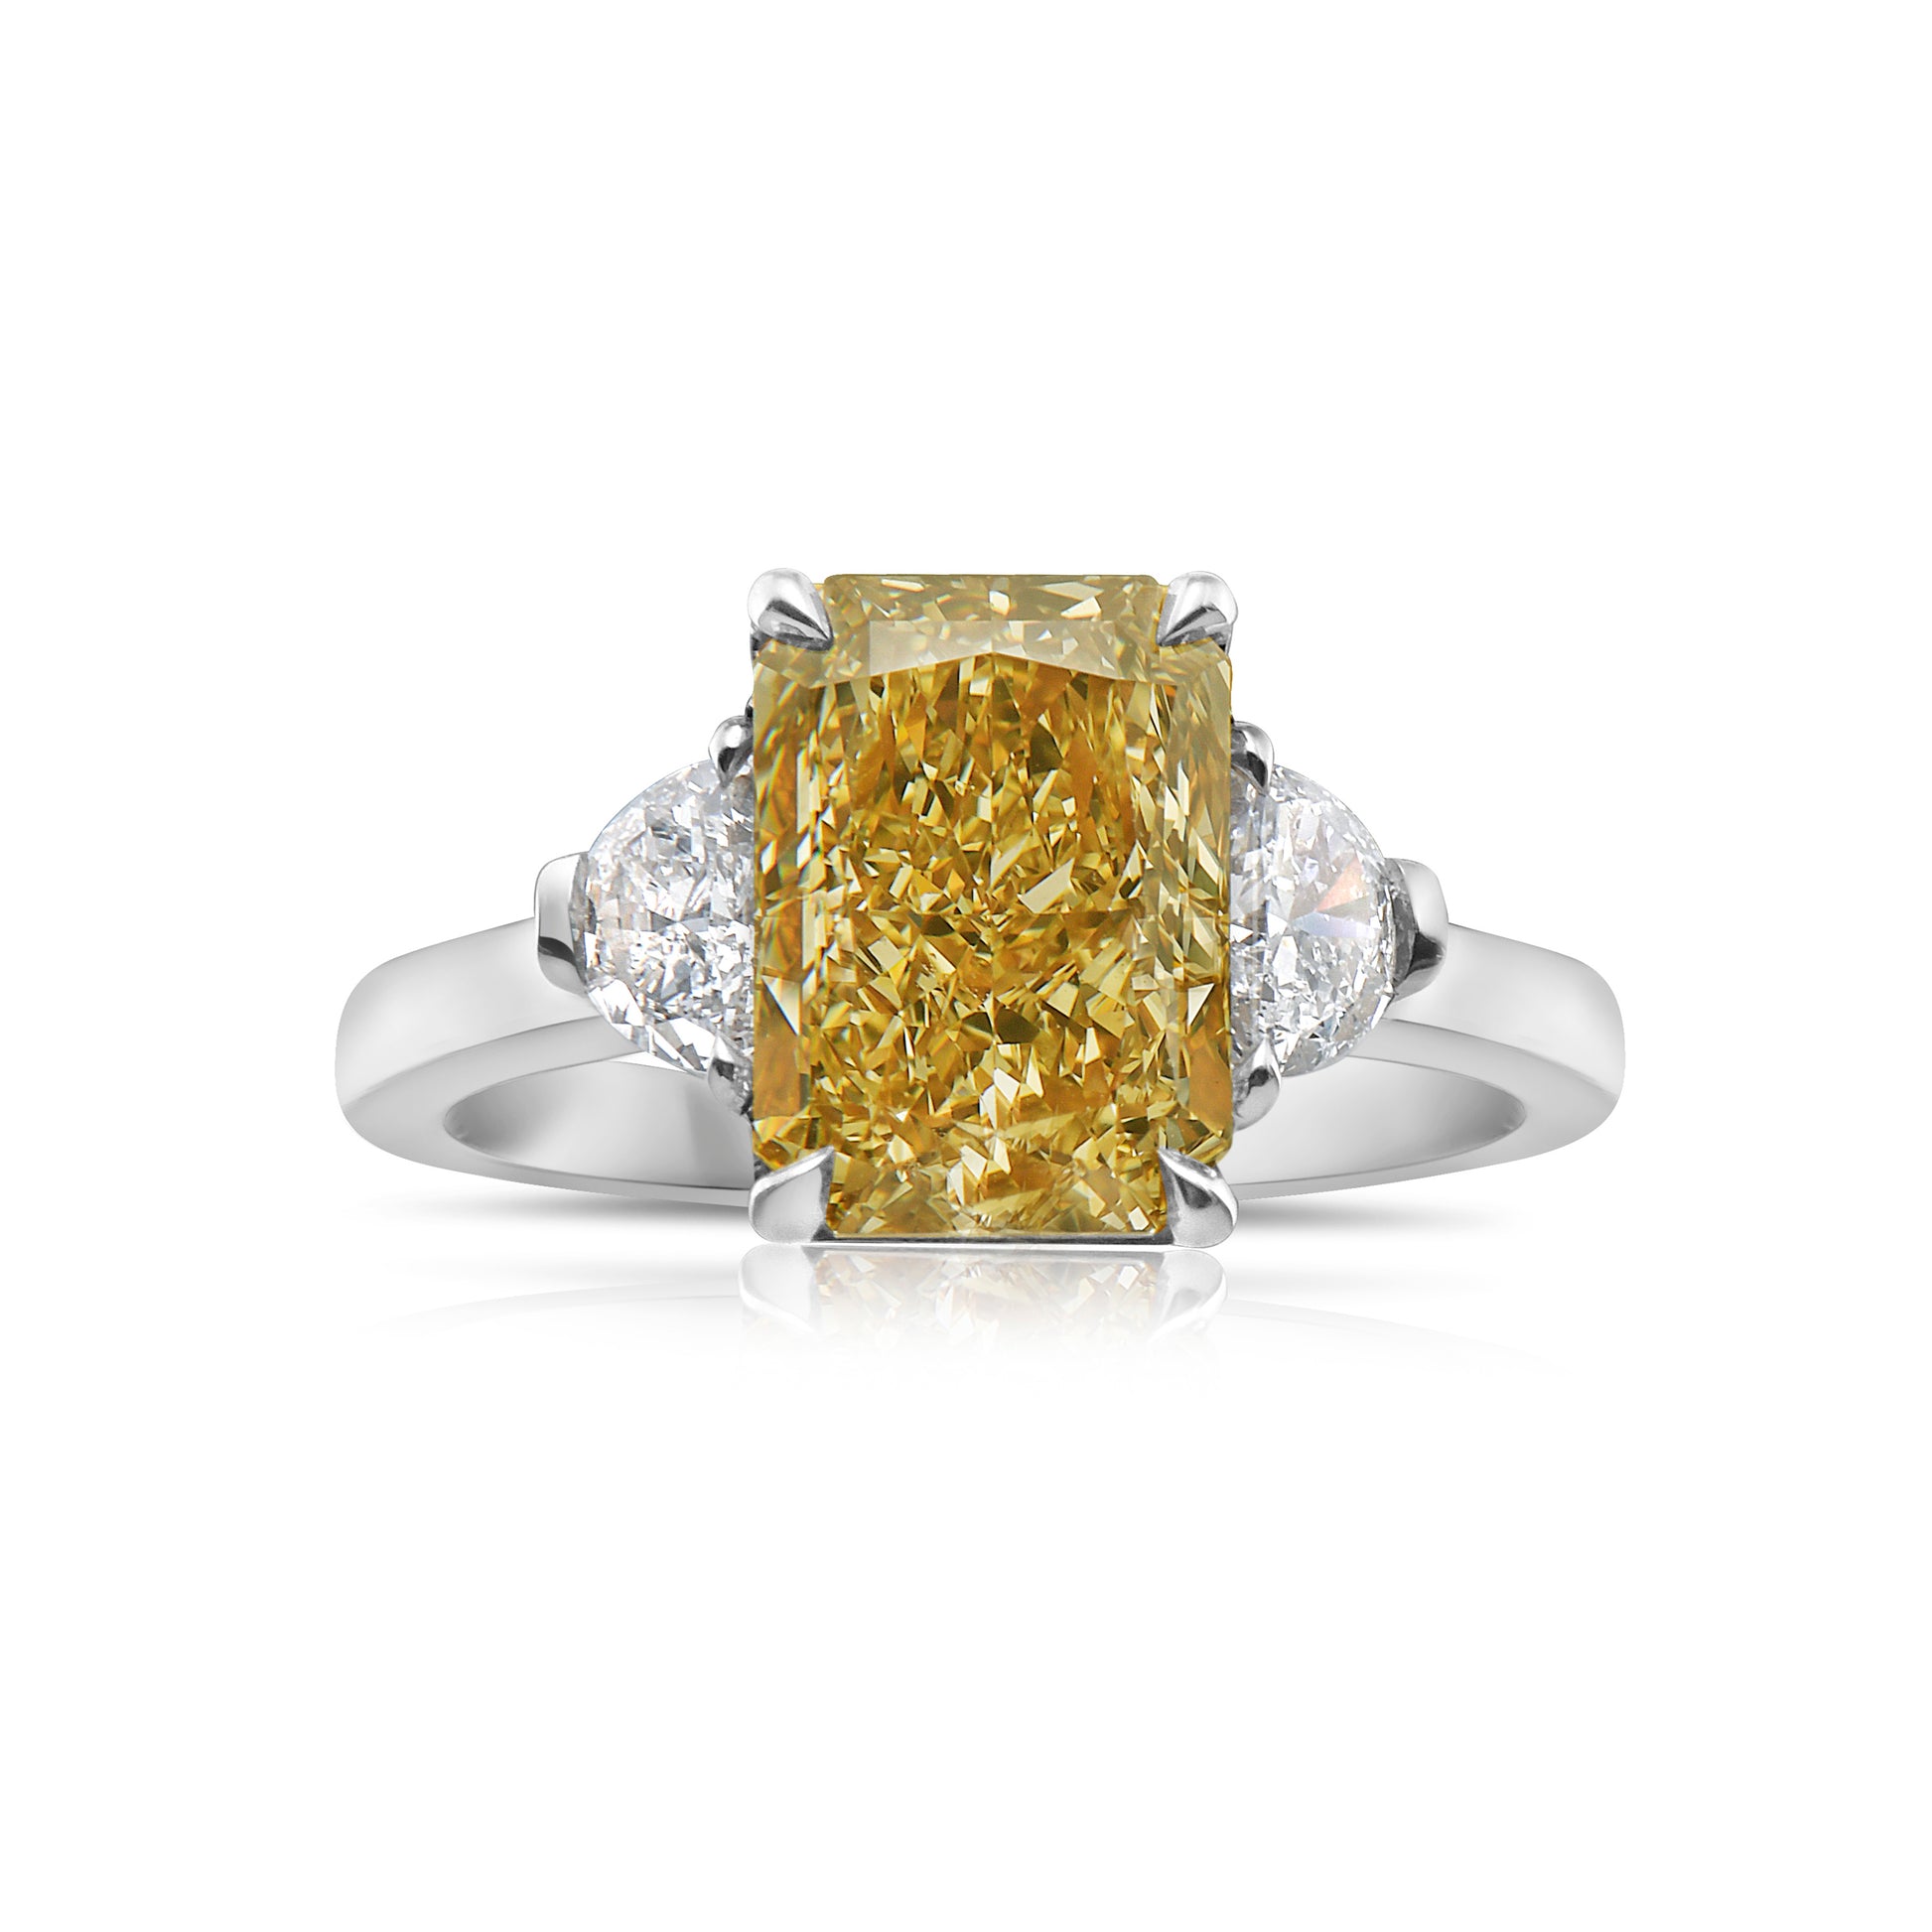 Long radiant. Long radiant yellow diamond. fancy yellow diamond ring. yellow diamond ring. 